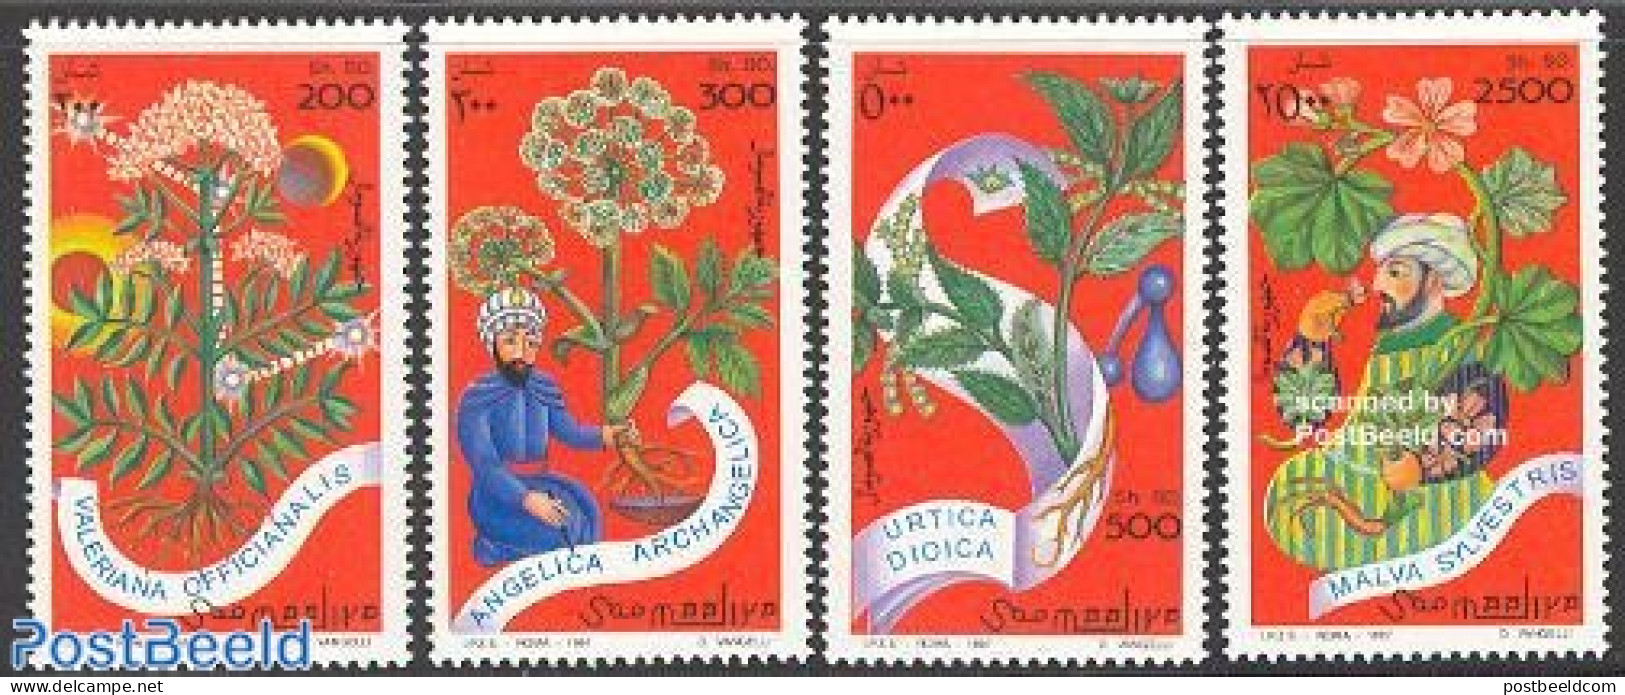 Somalia 1997 Medical Plants 4v, Mint NH, Health - Nature - Health - Flowers & Plants - Somalië (1960-...)